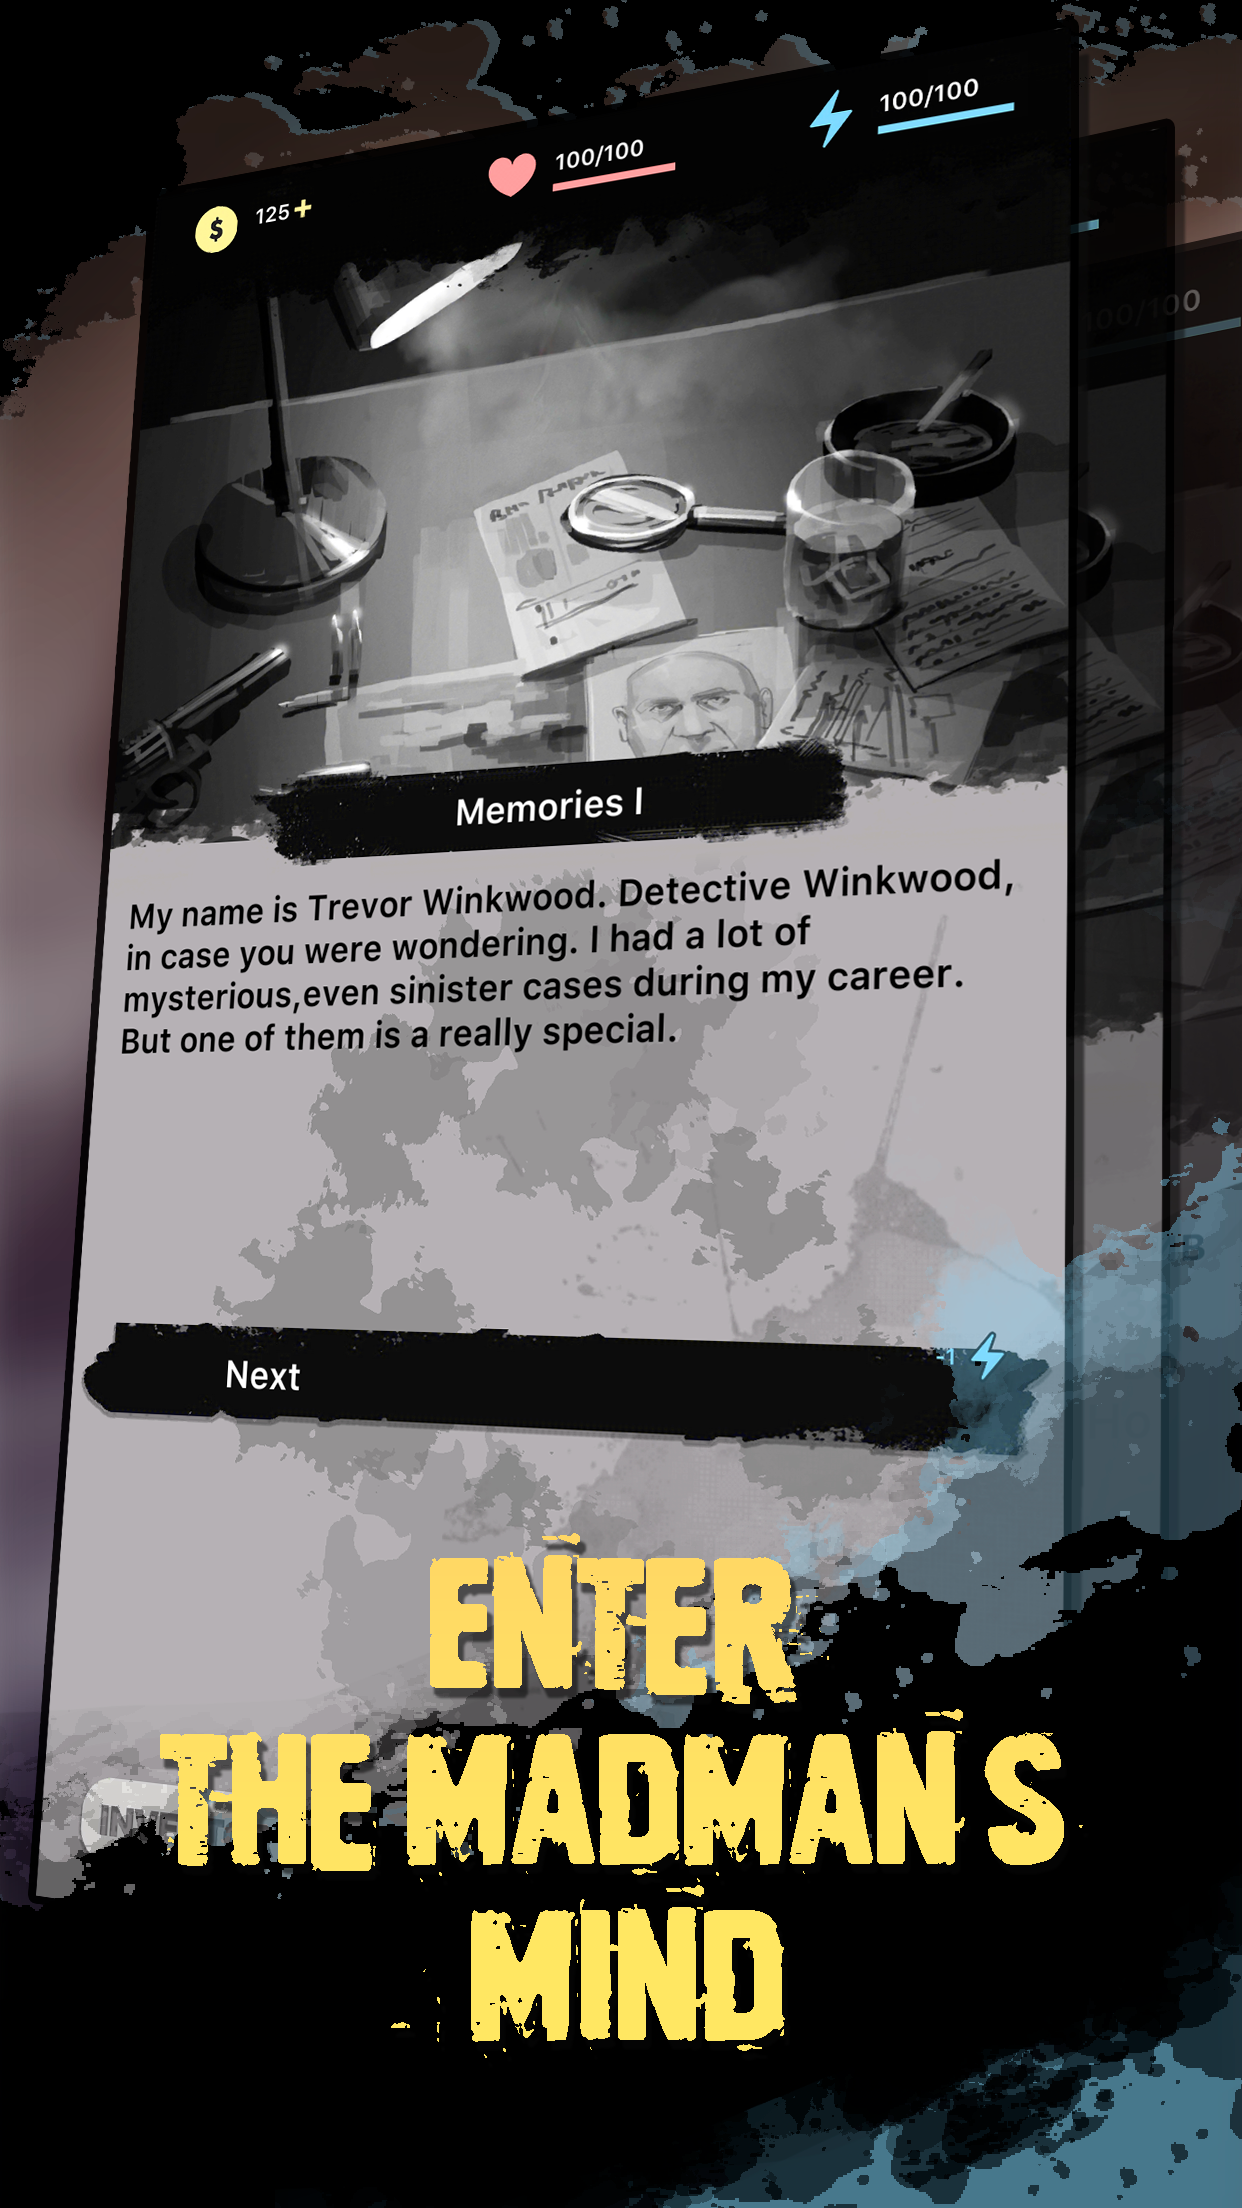 Screenshot 1 of Games in Dreams: historia de detectives criminales 